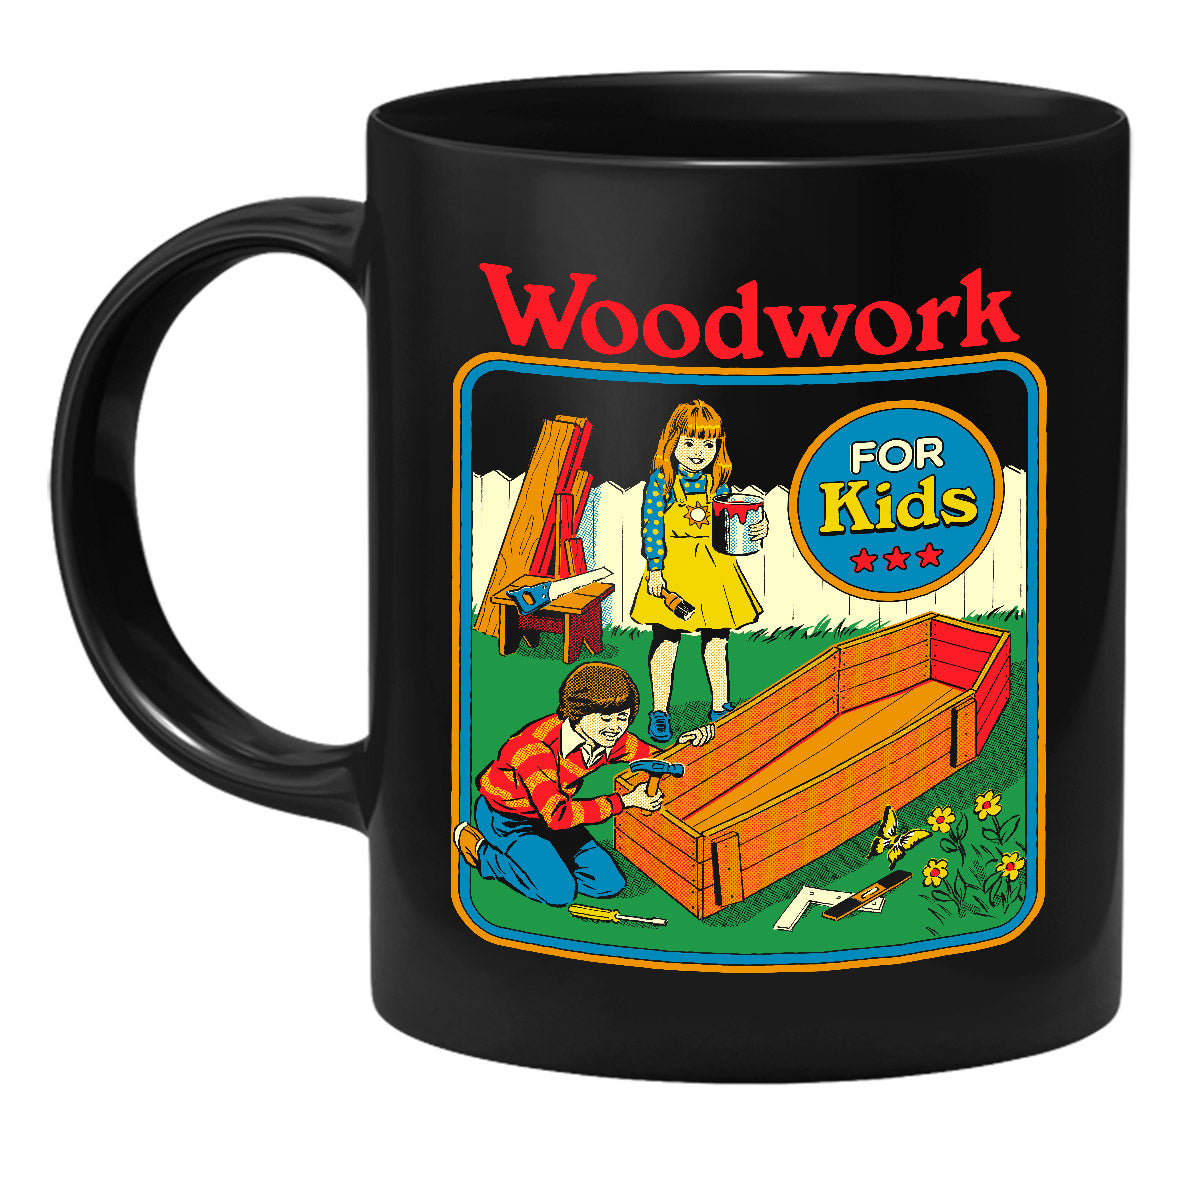 Steven Rhodes - Woodwork for Kids - Mug